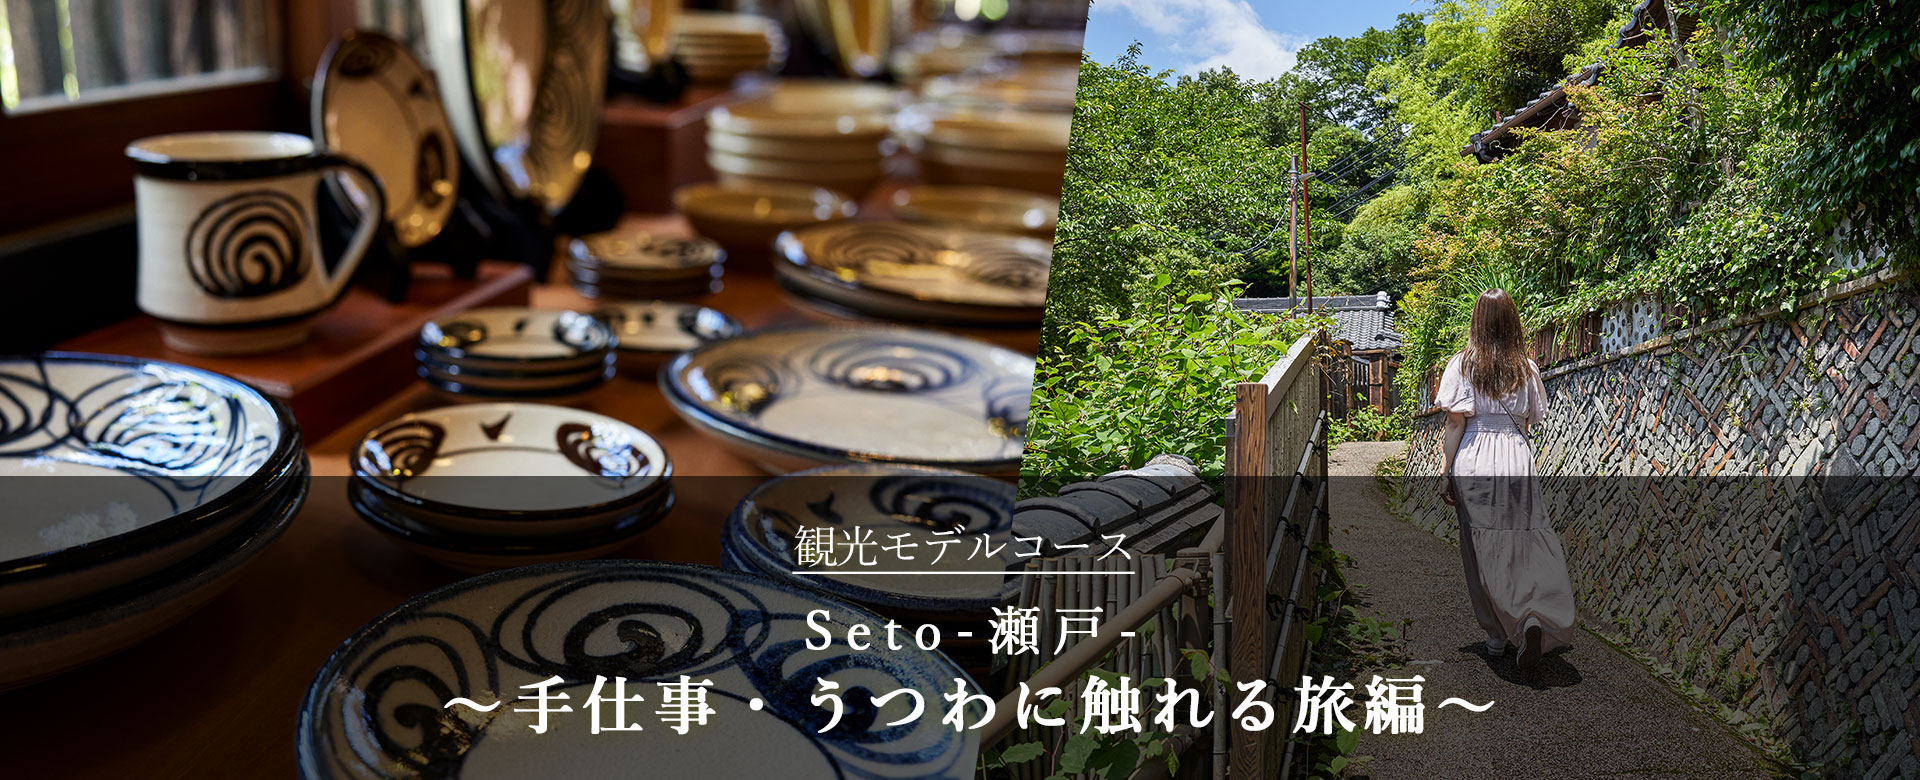 Seto-瀬戸- ～手仕事・うつわに触れる旅編～